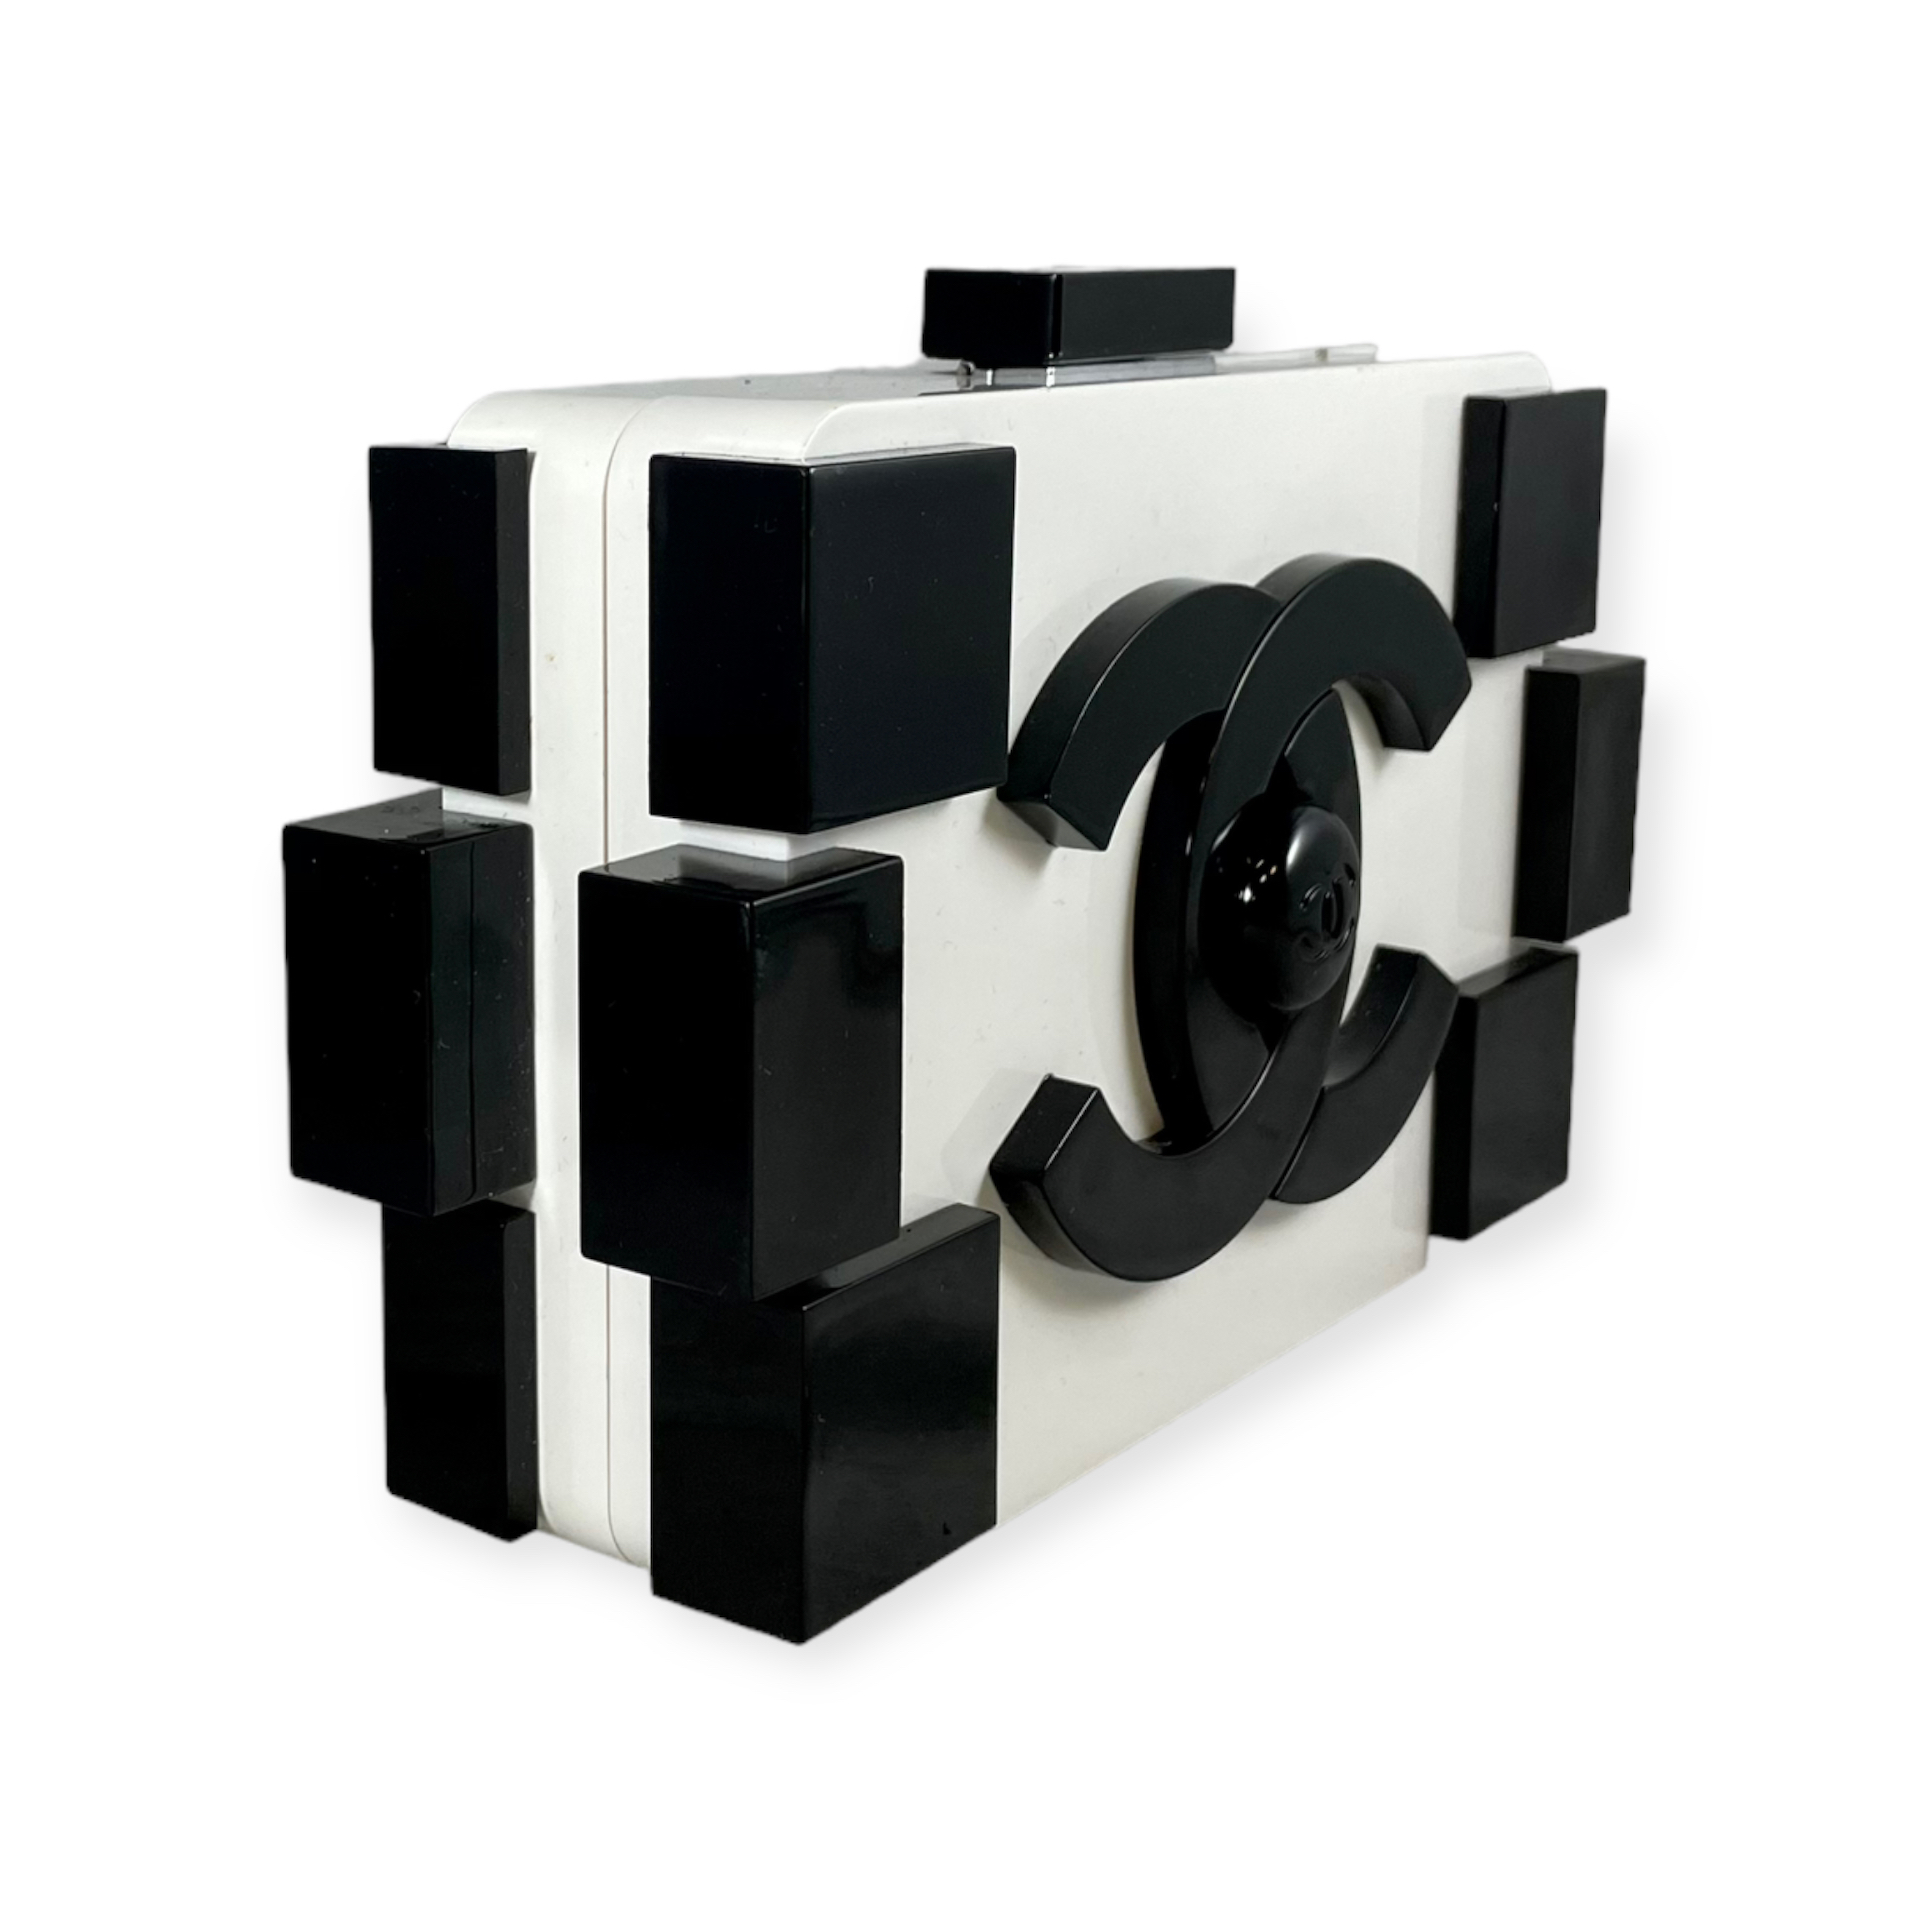 Chanel Lego Clutch in White / Black | MTYCI